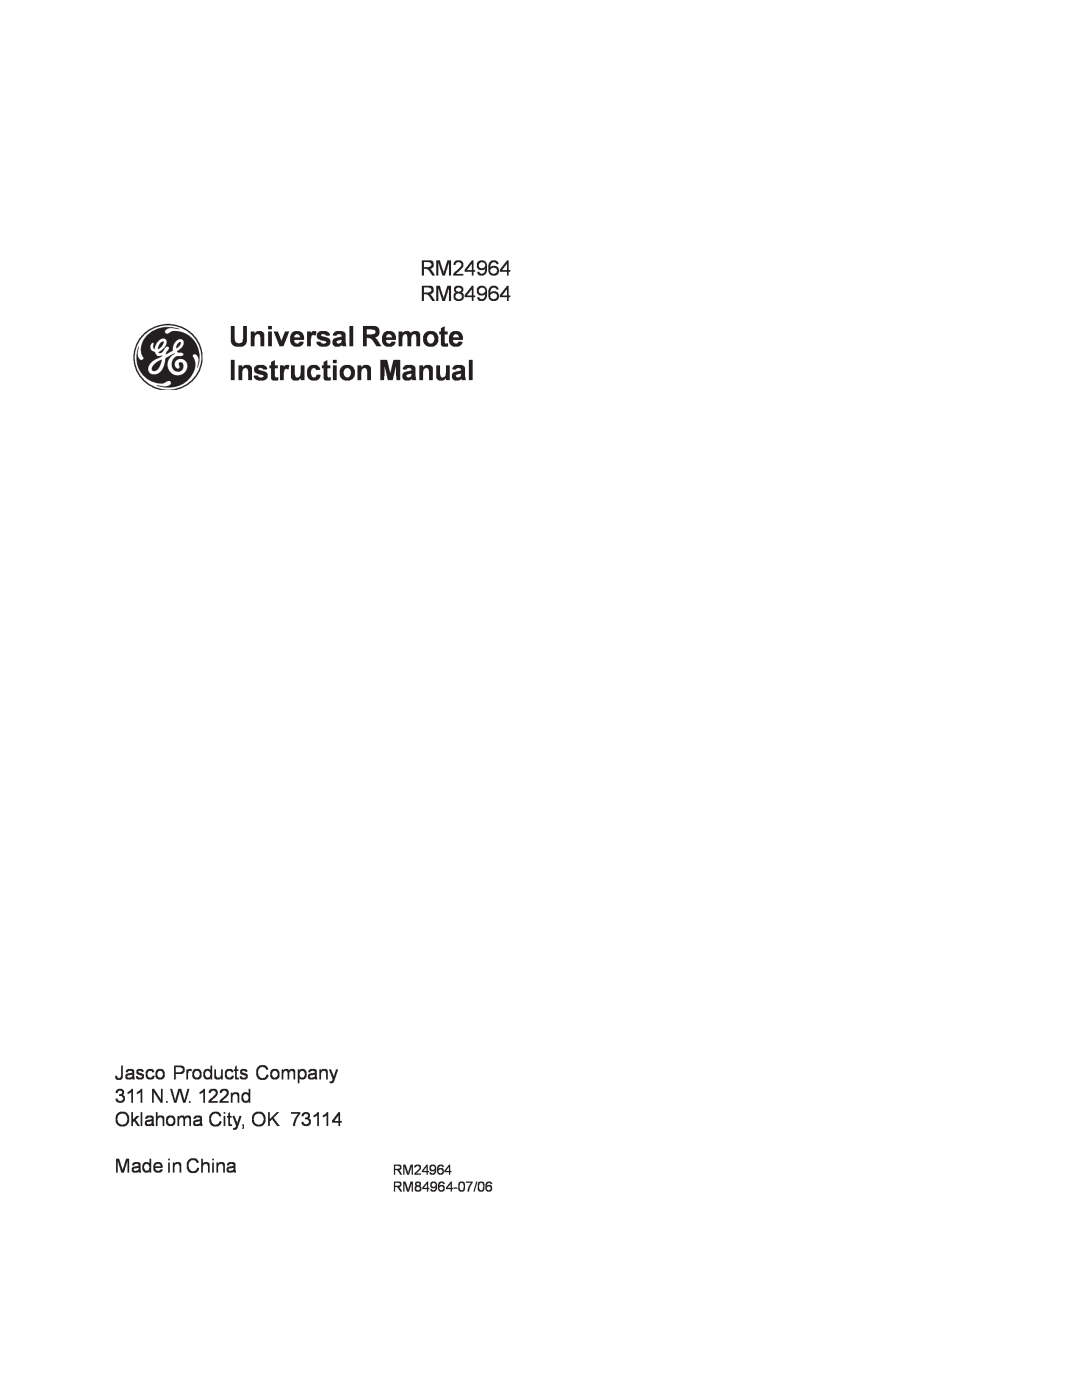 Jasco instruction manual Universal Remote Instruction Manual, RM24964 RM84964-07/06 